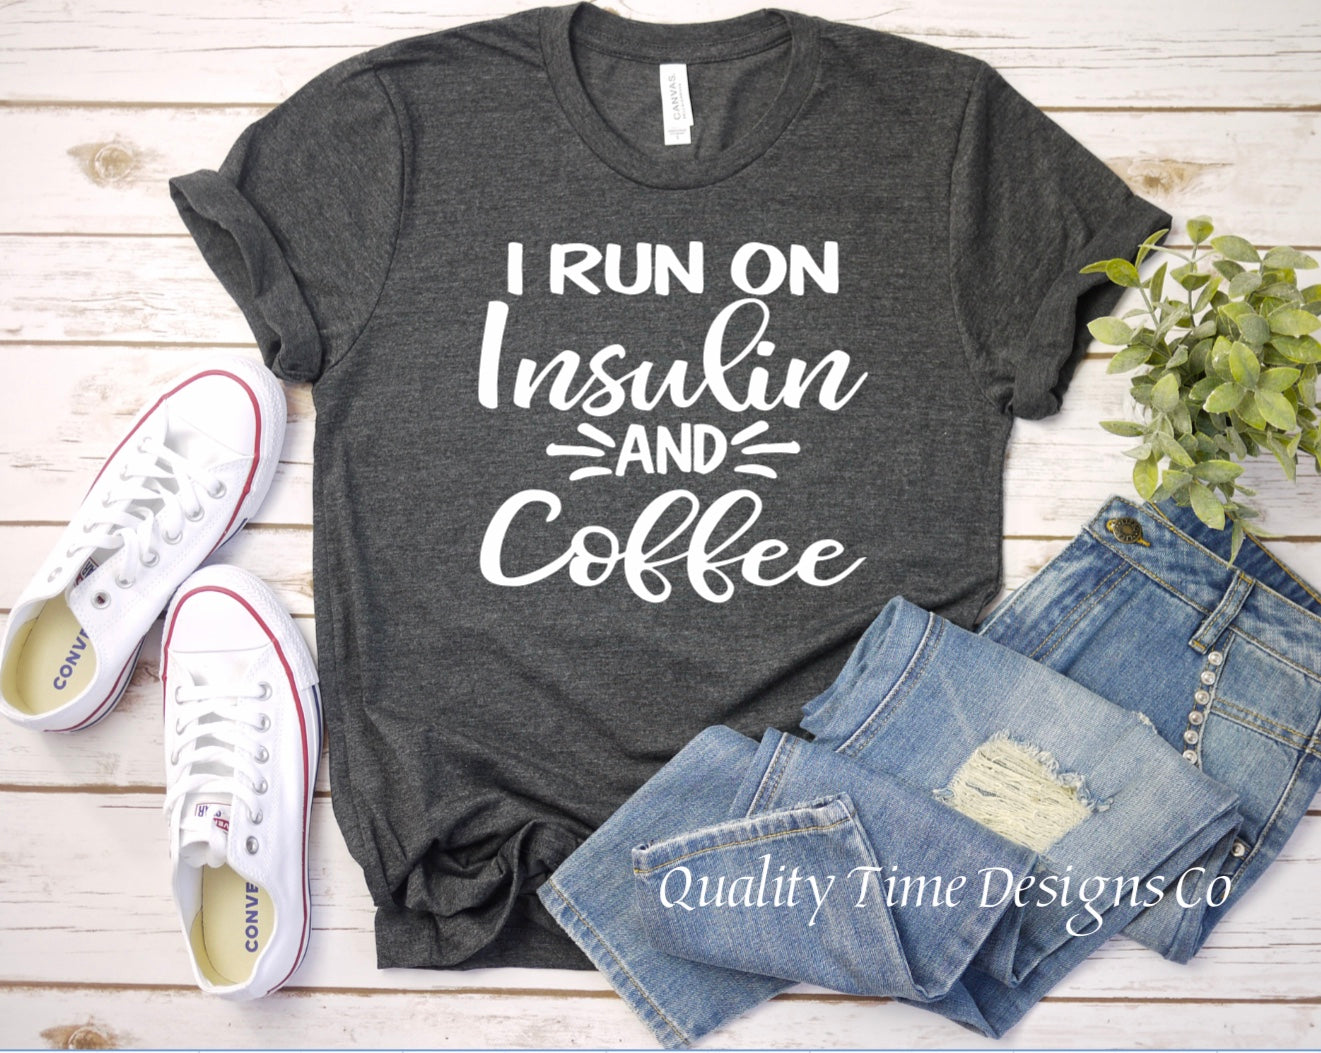 I run on insulin and coffee t shirt